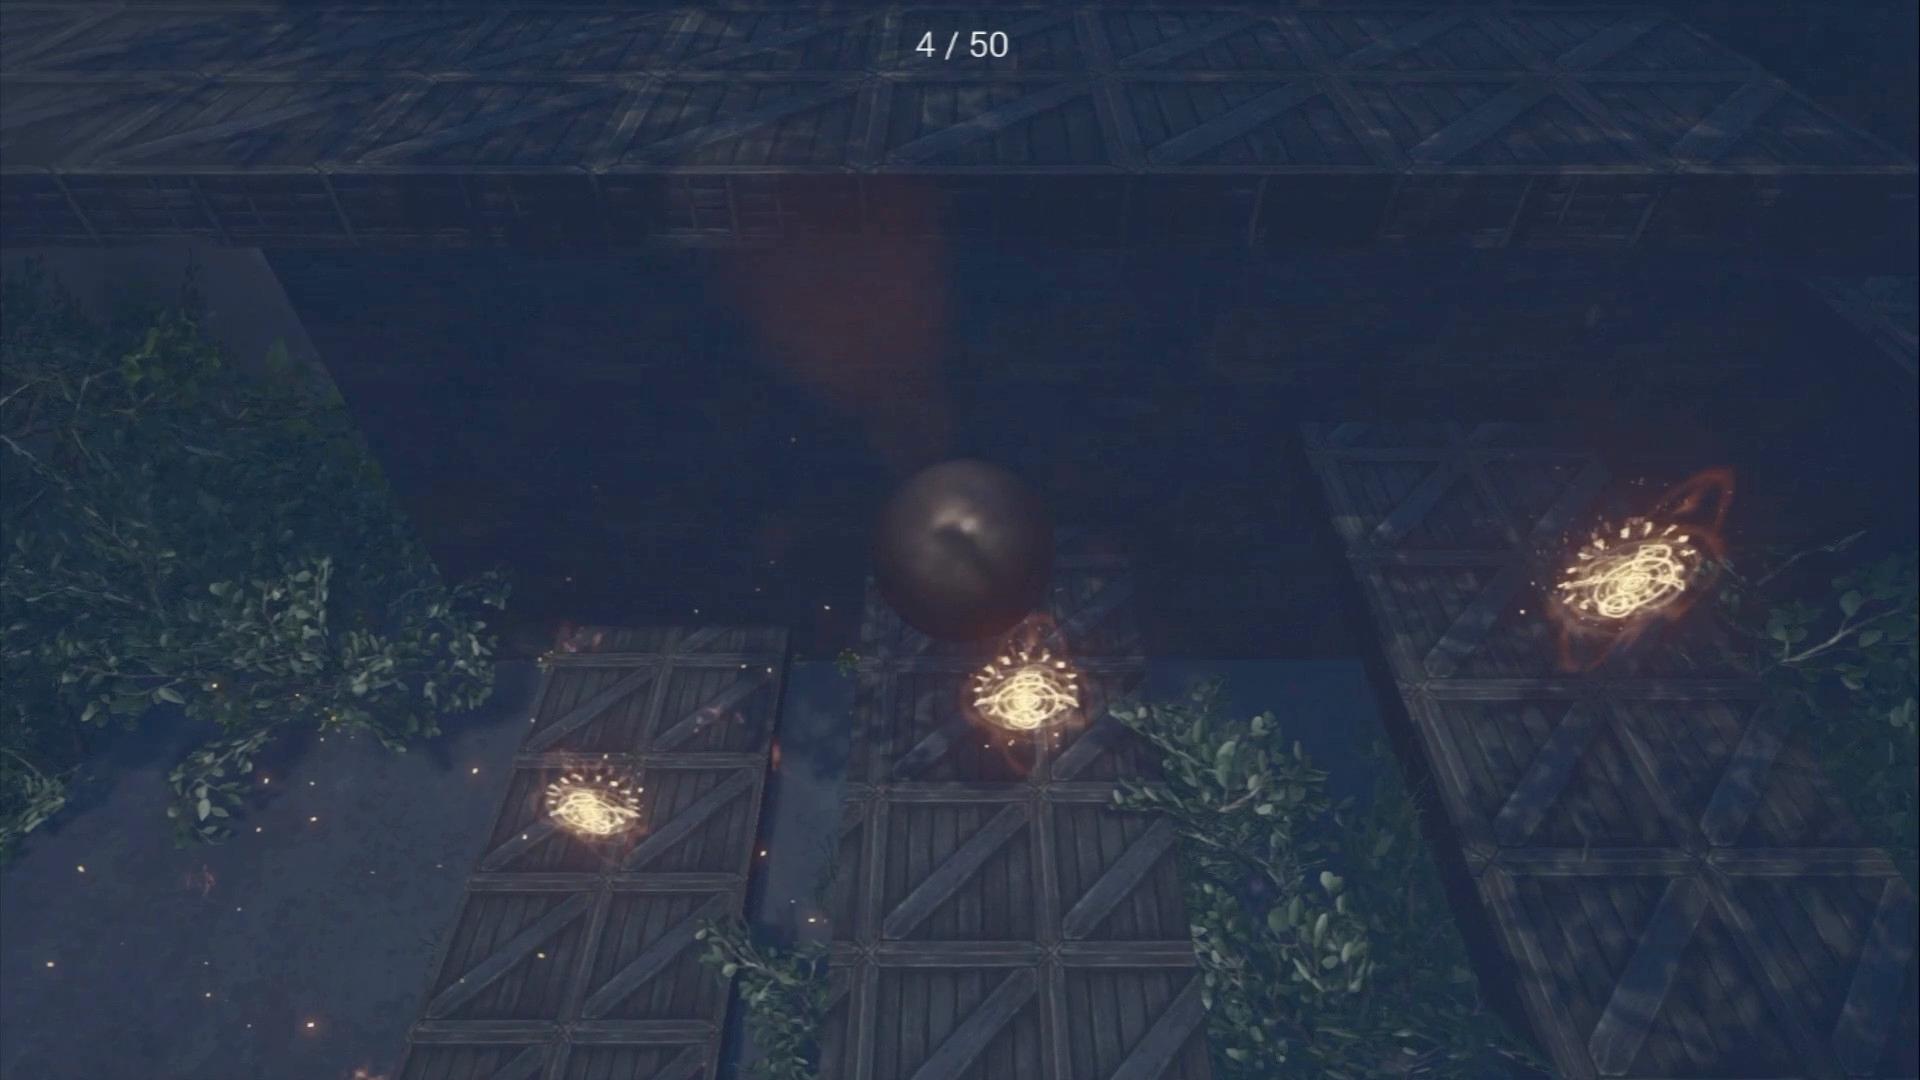 Screenshot №6 from game ZRoll